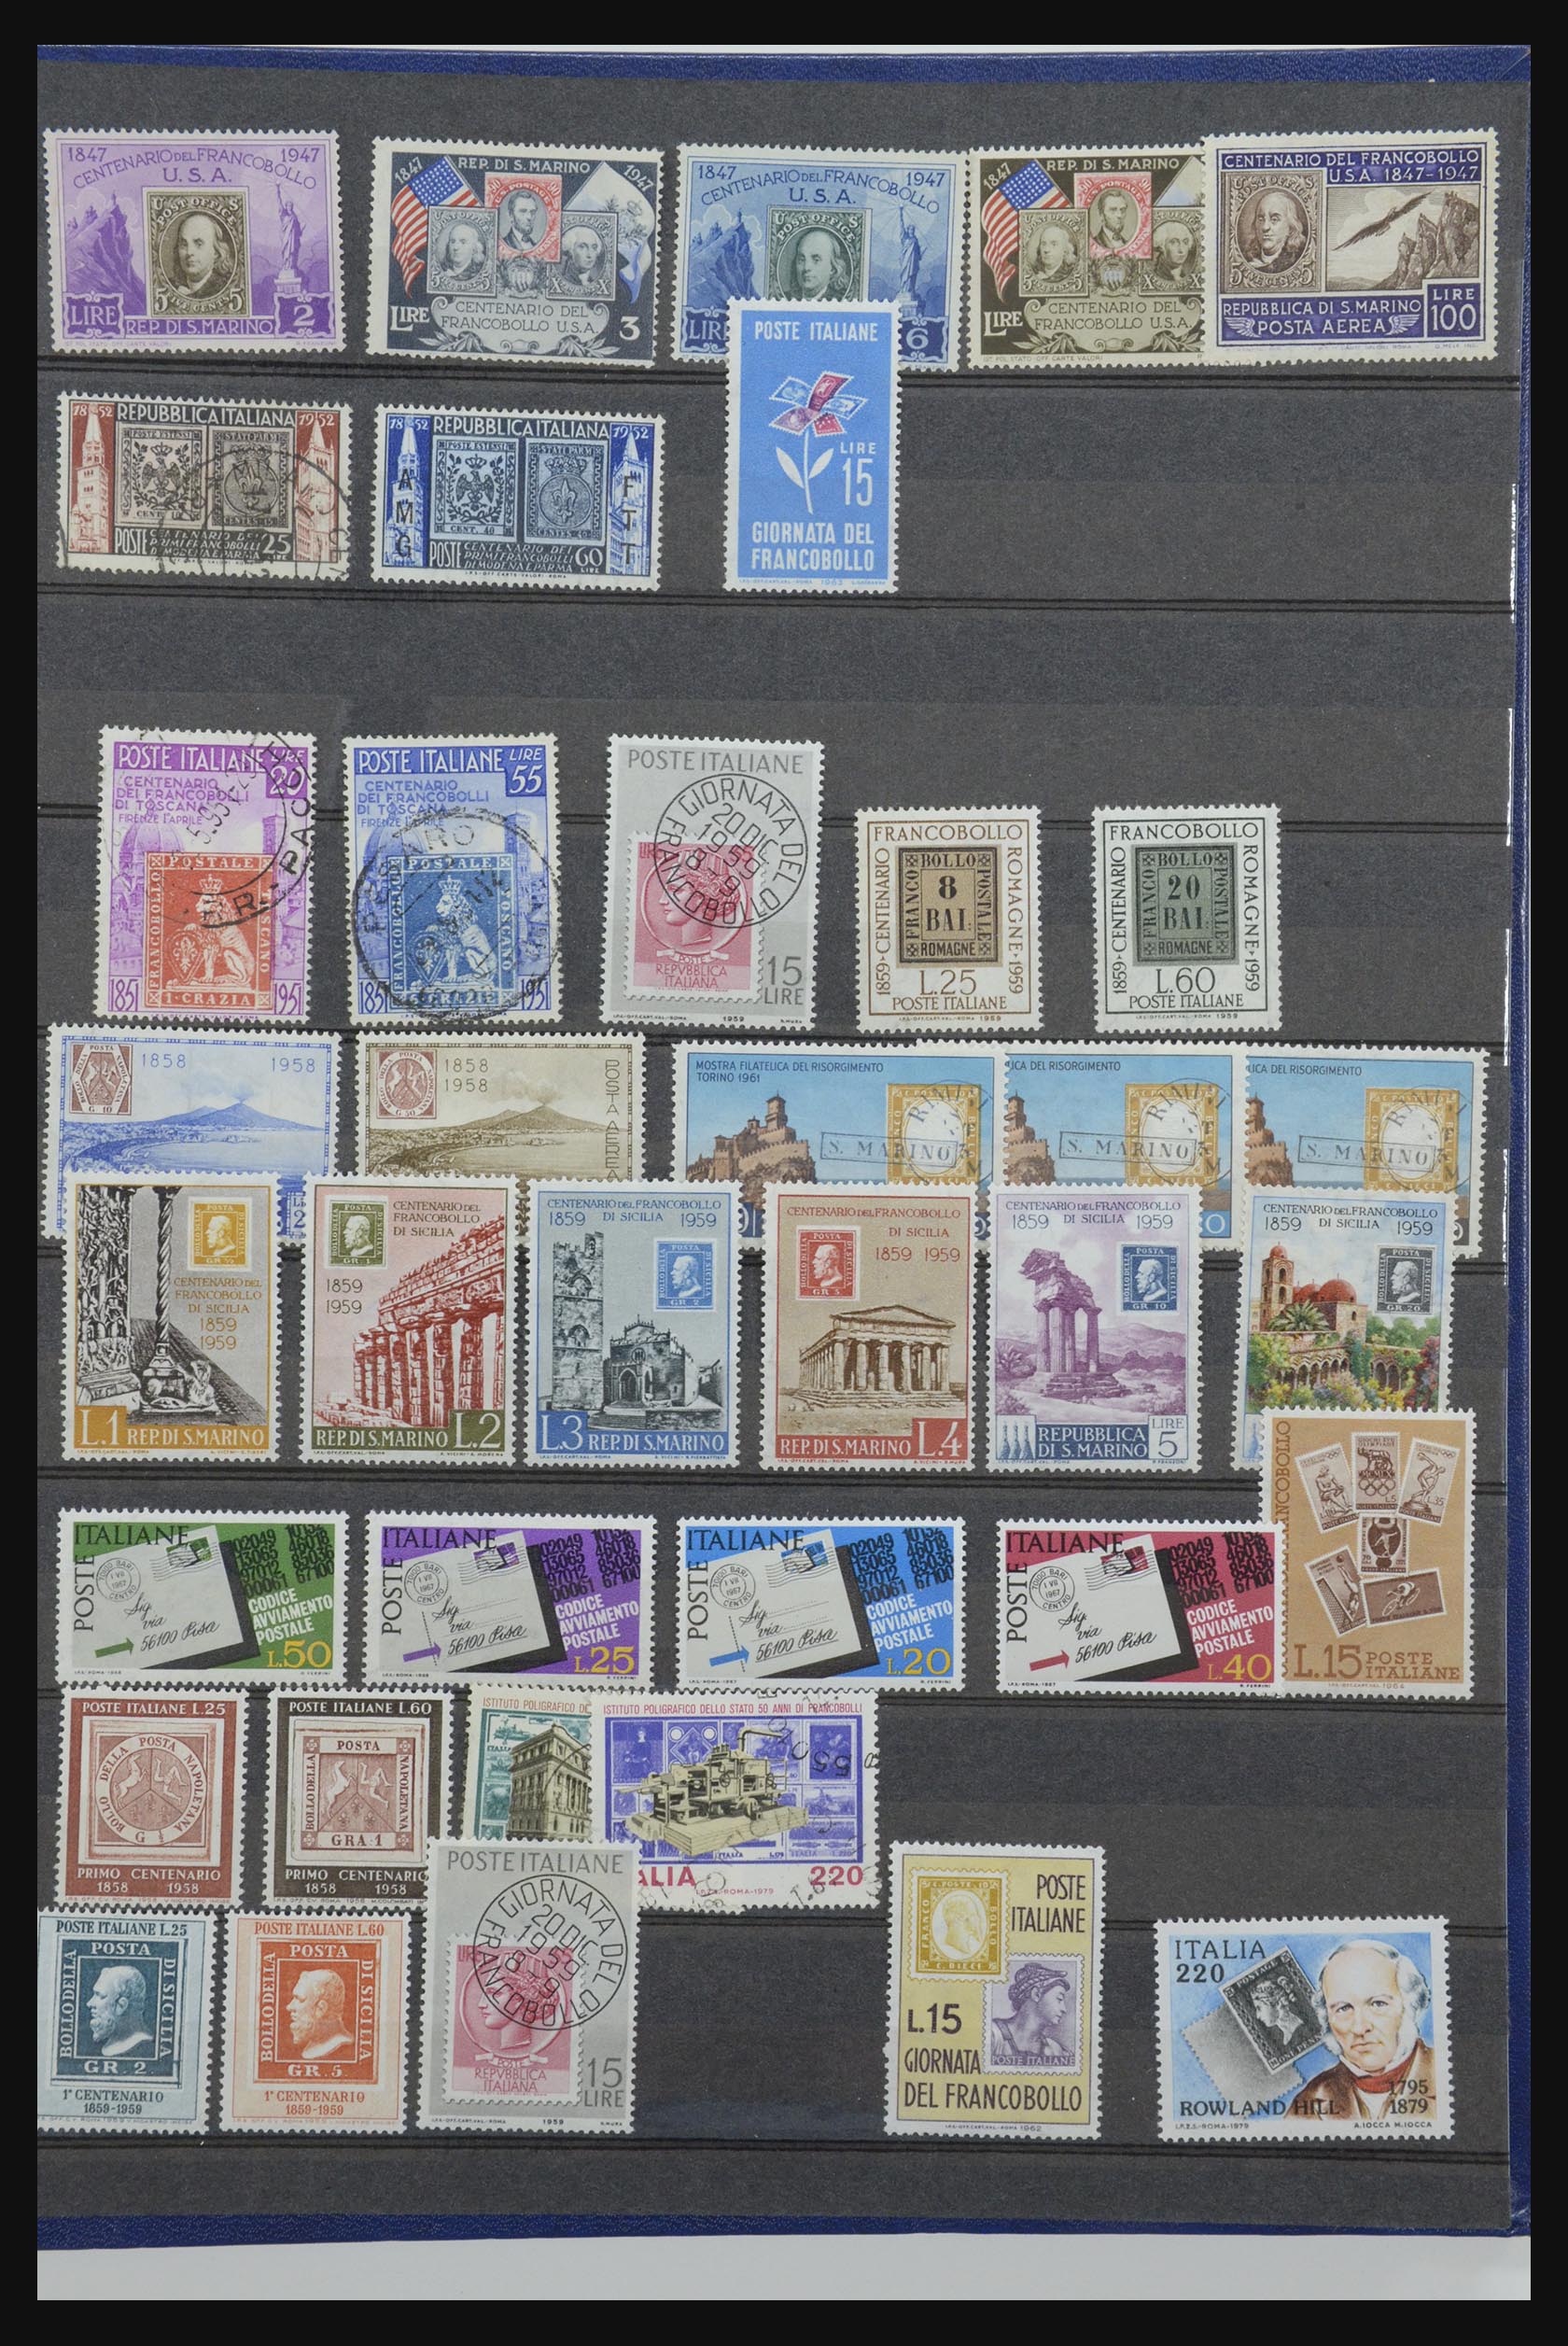 31652 046 - 31652 Motief: postzegel op postzegel 1940-1993.